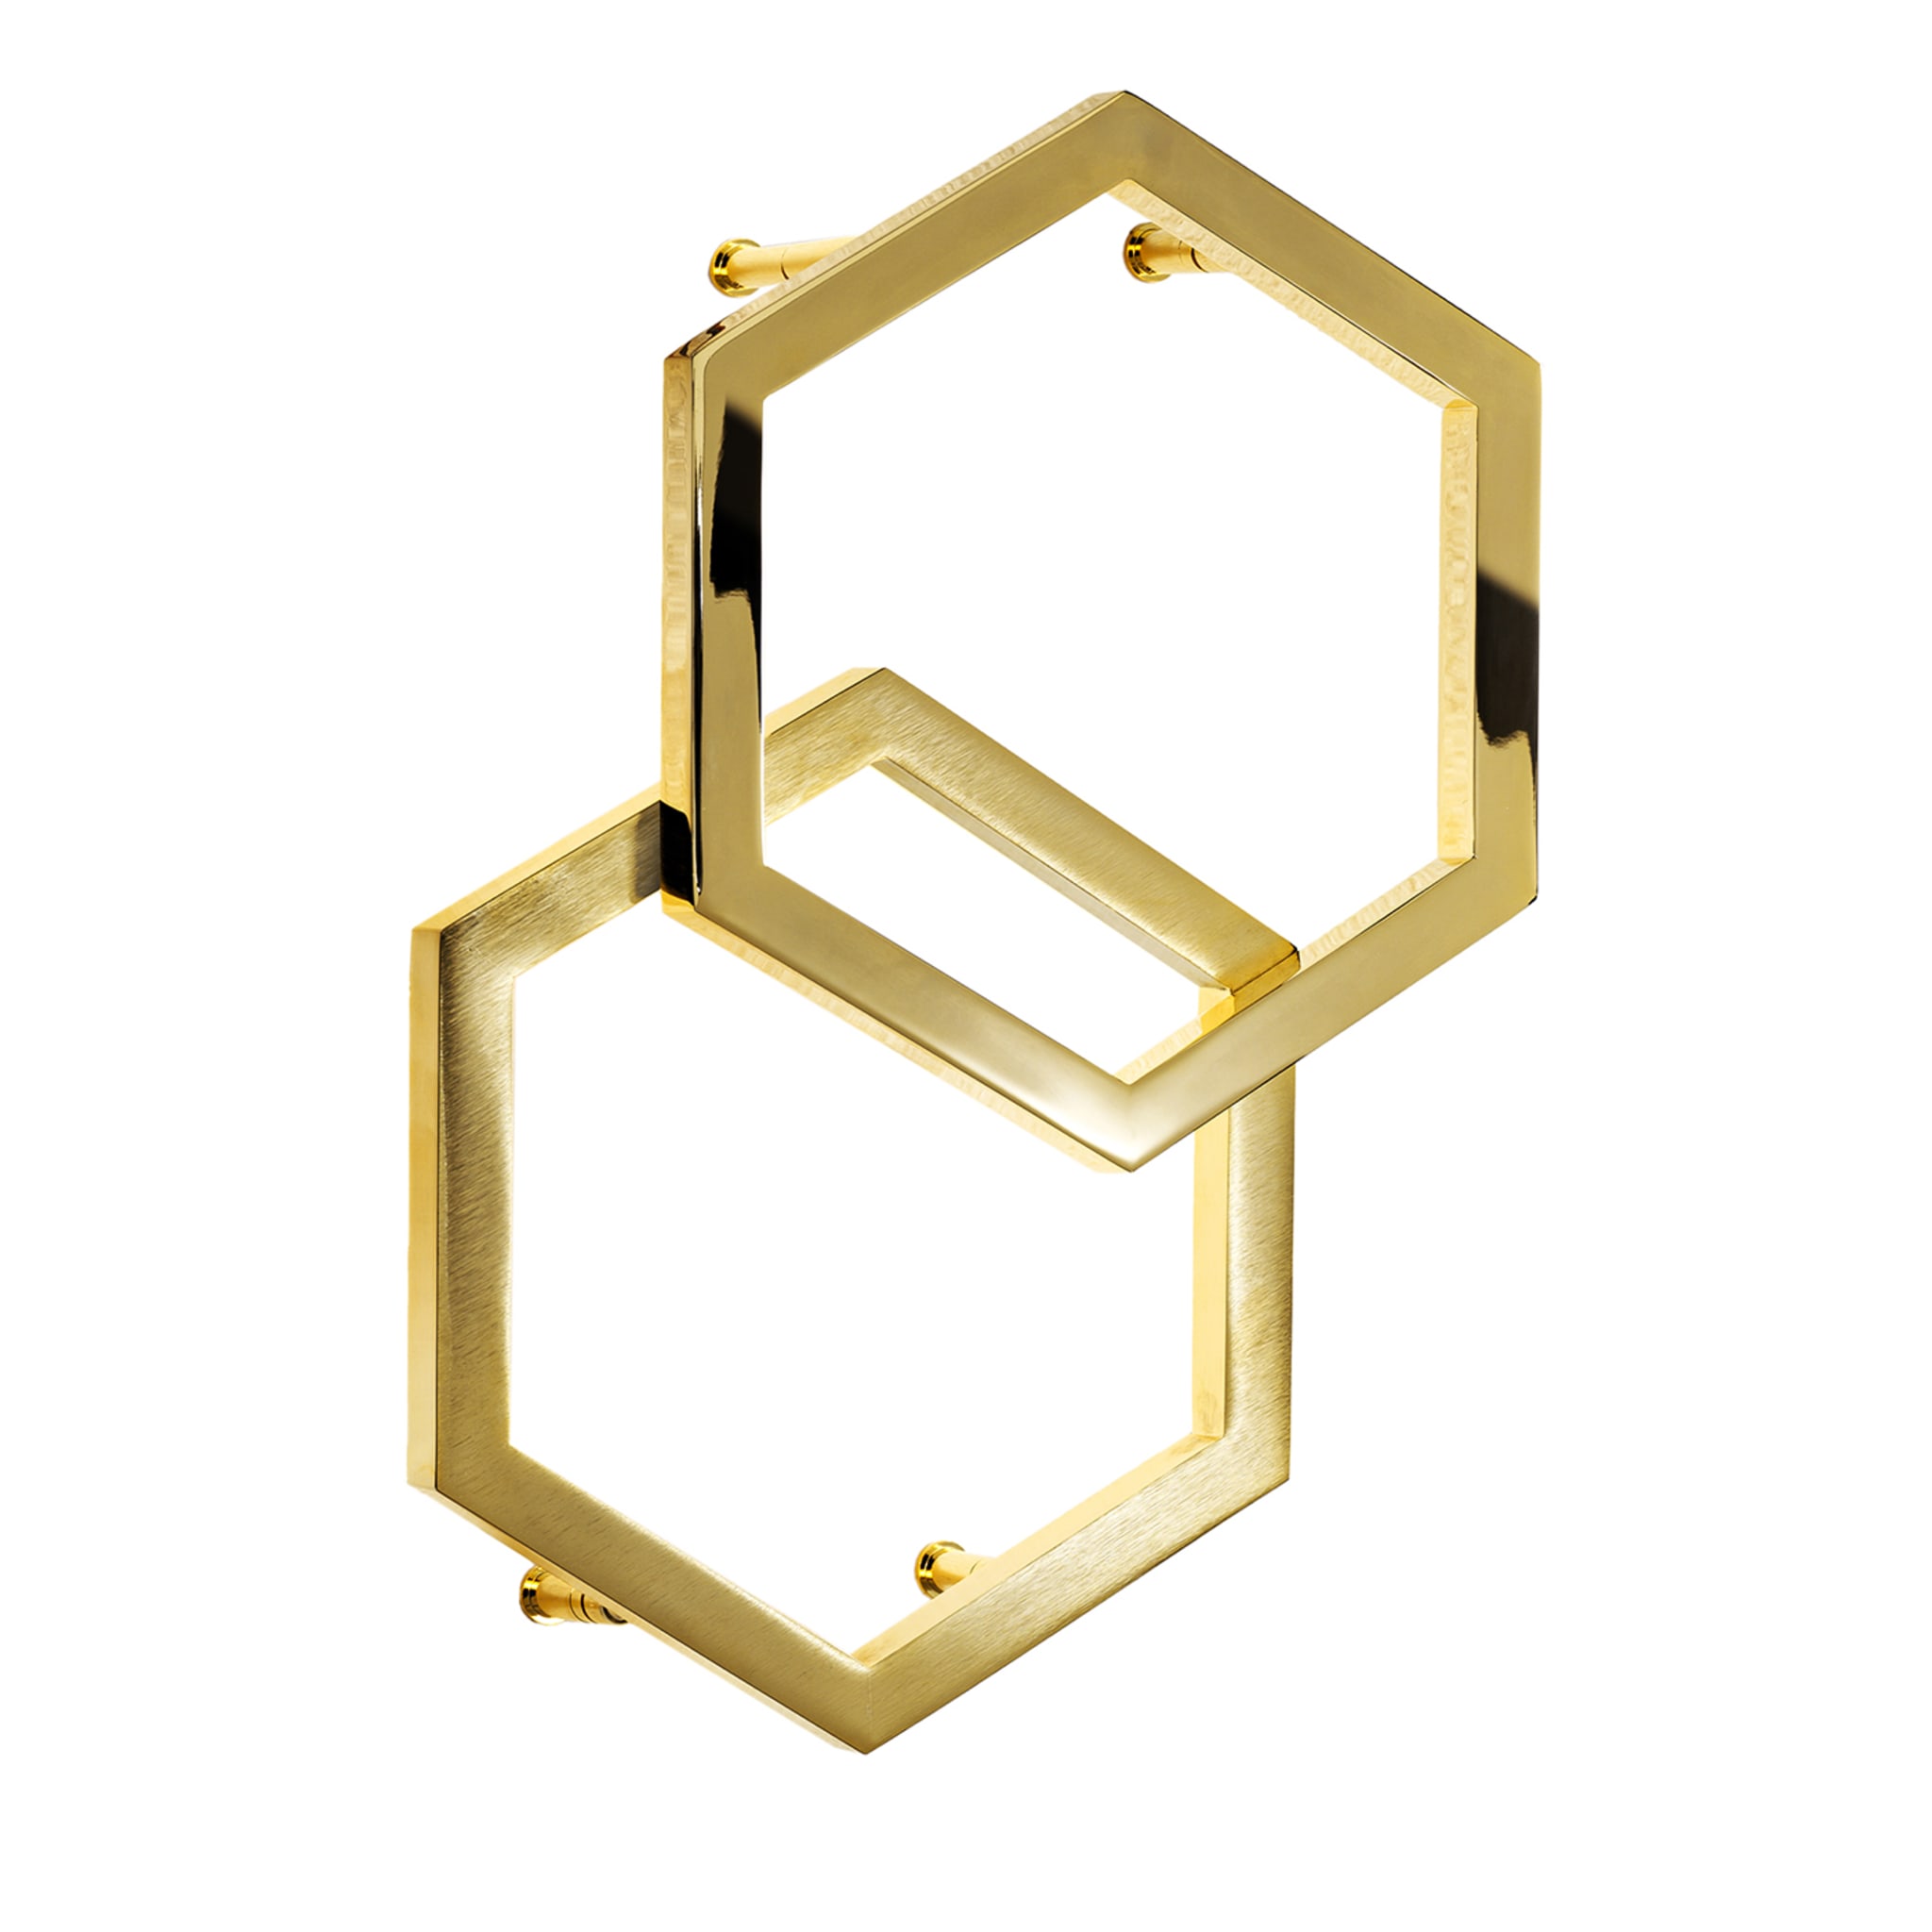 Hexagon Golden Sconce #2 - Main view